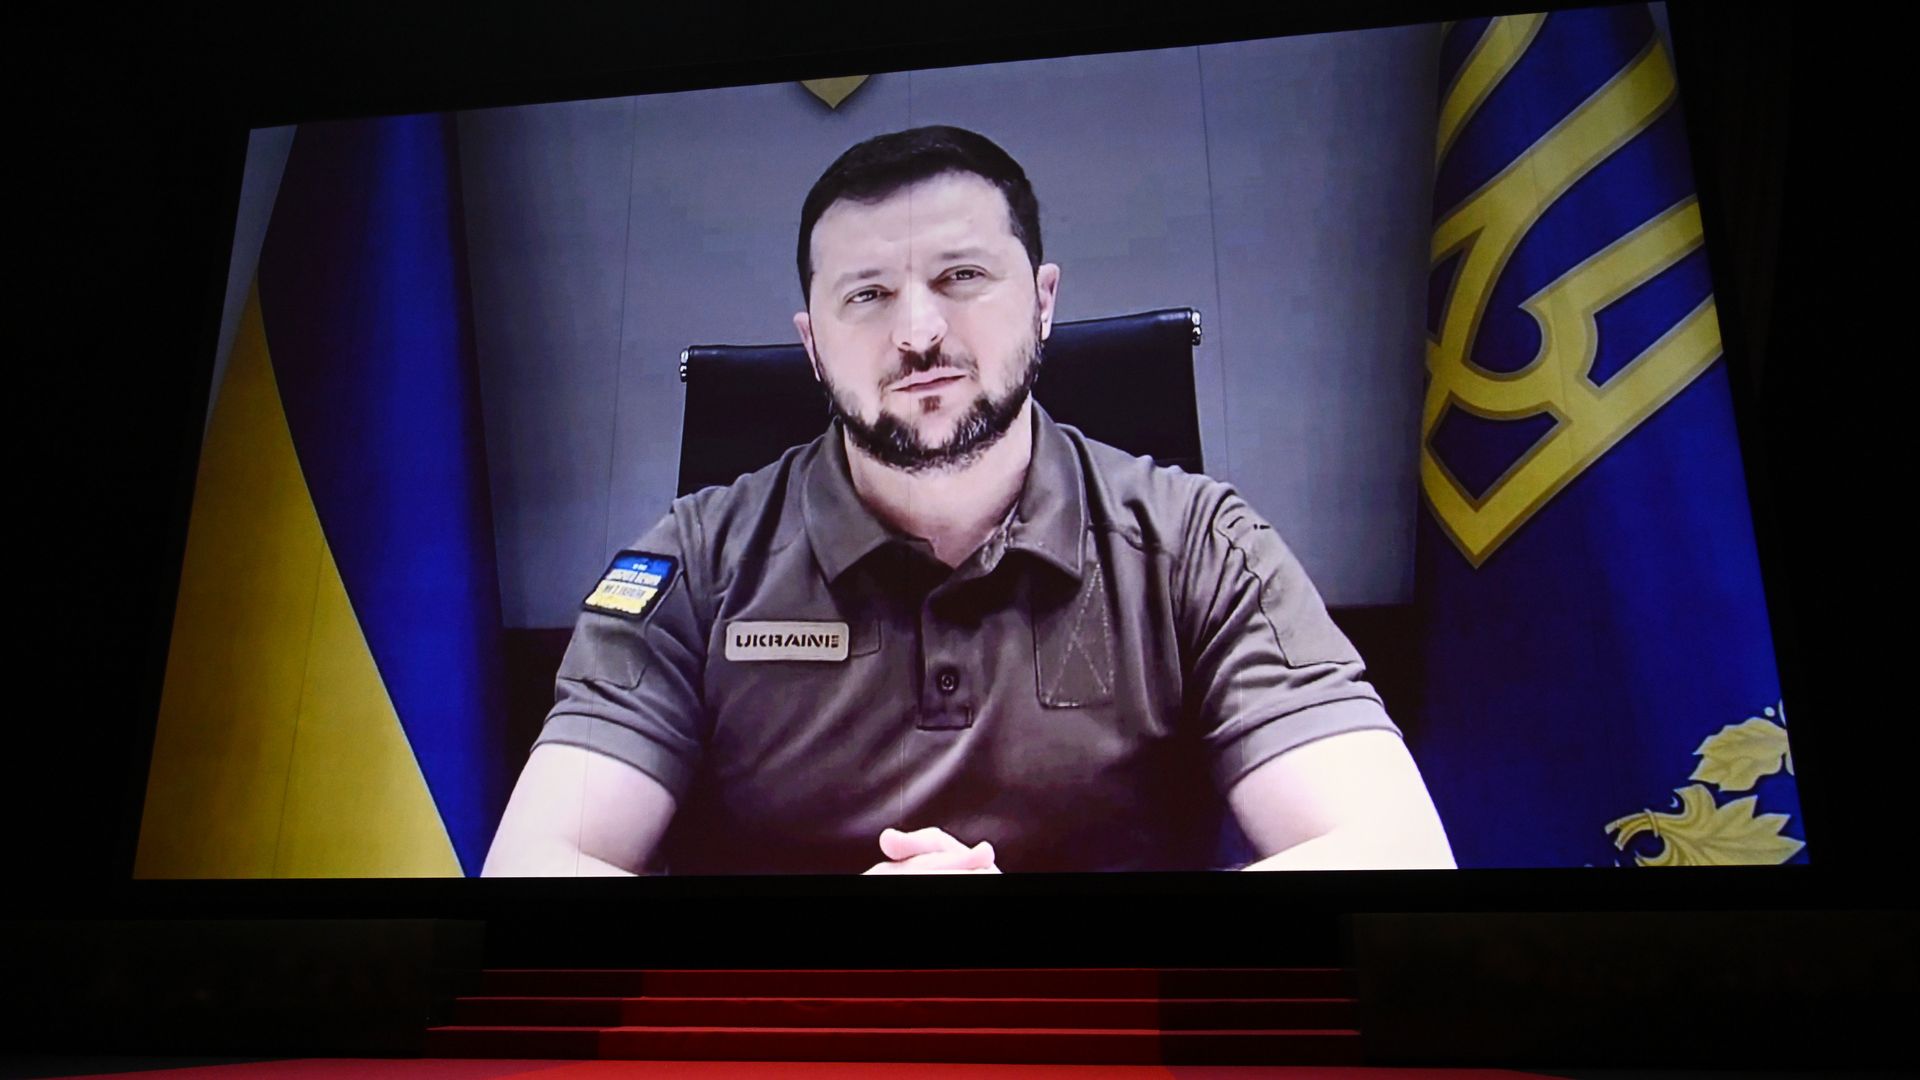 Photo of Volodymyr Zelenskyy on a screen